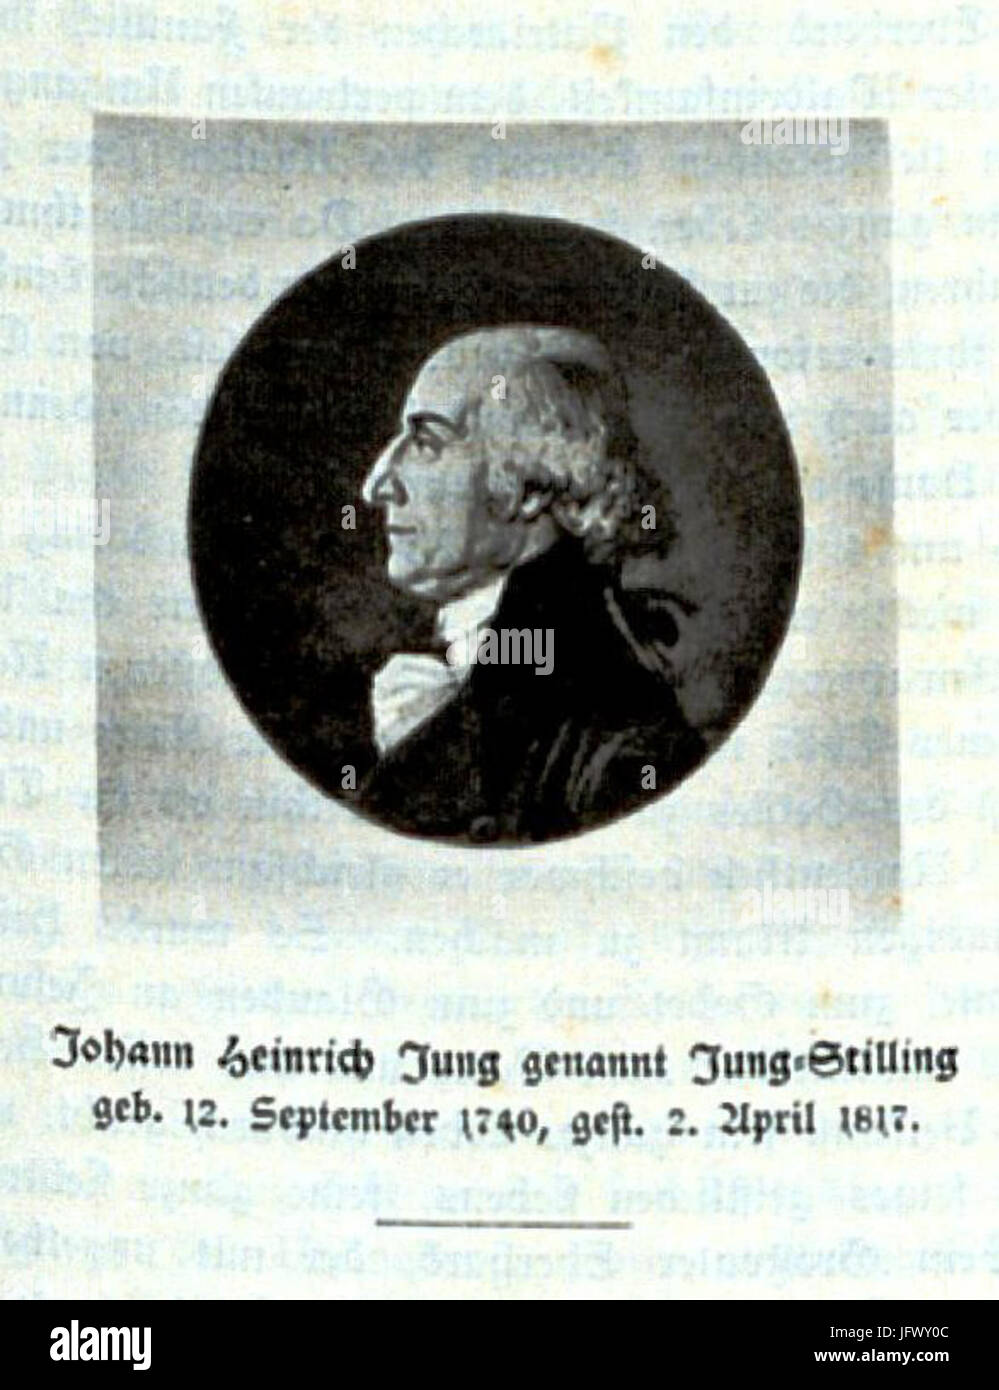 CHRONIK DER FAMILIE FLENDER, Ludwig Voss (Verlag), Düsseldorf 1900, S. 35 (Johann Heinrich Jung genannt Jung-Stilling) Stock Photo